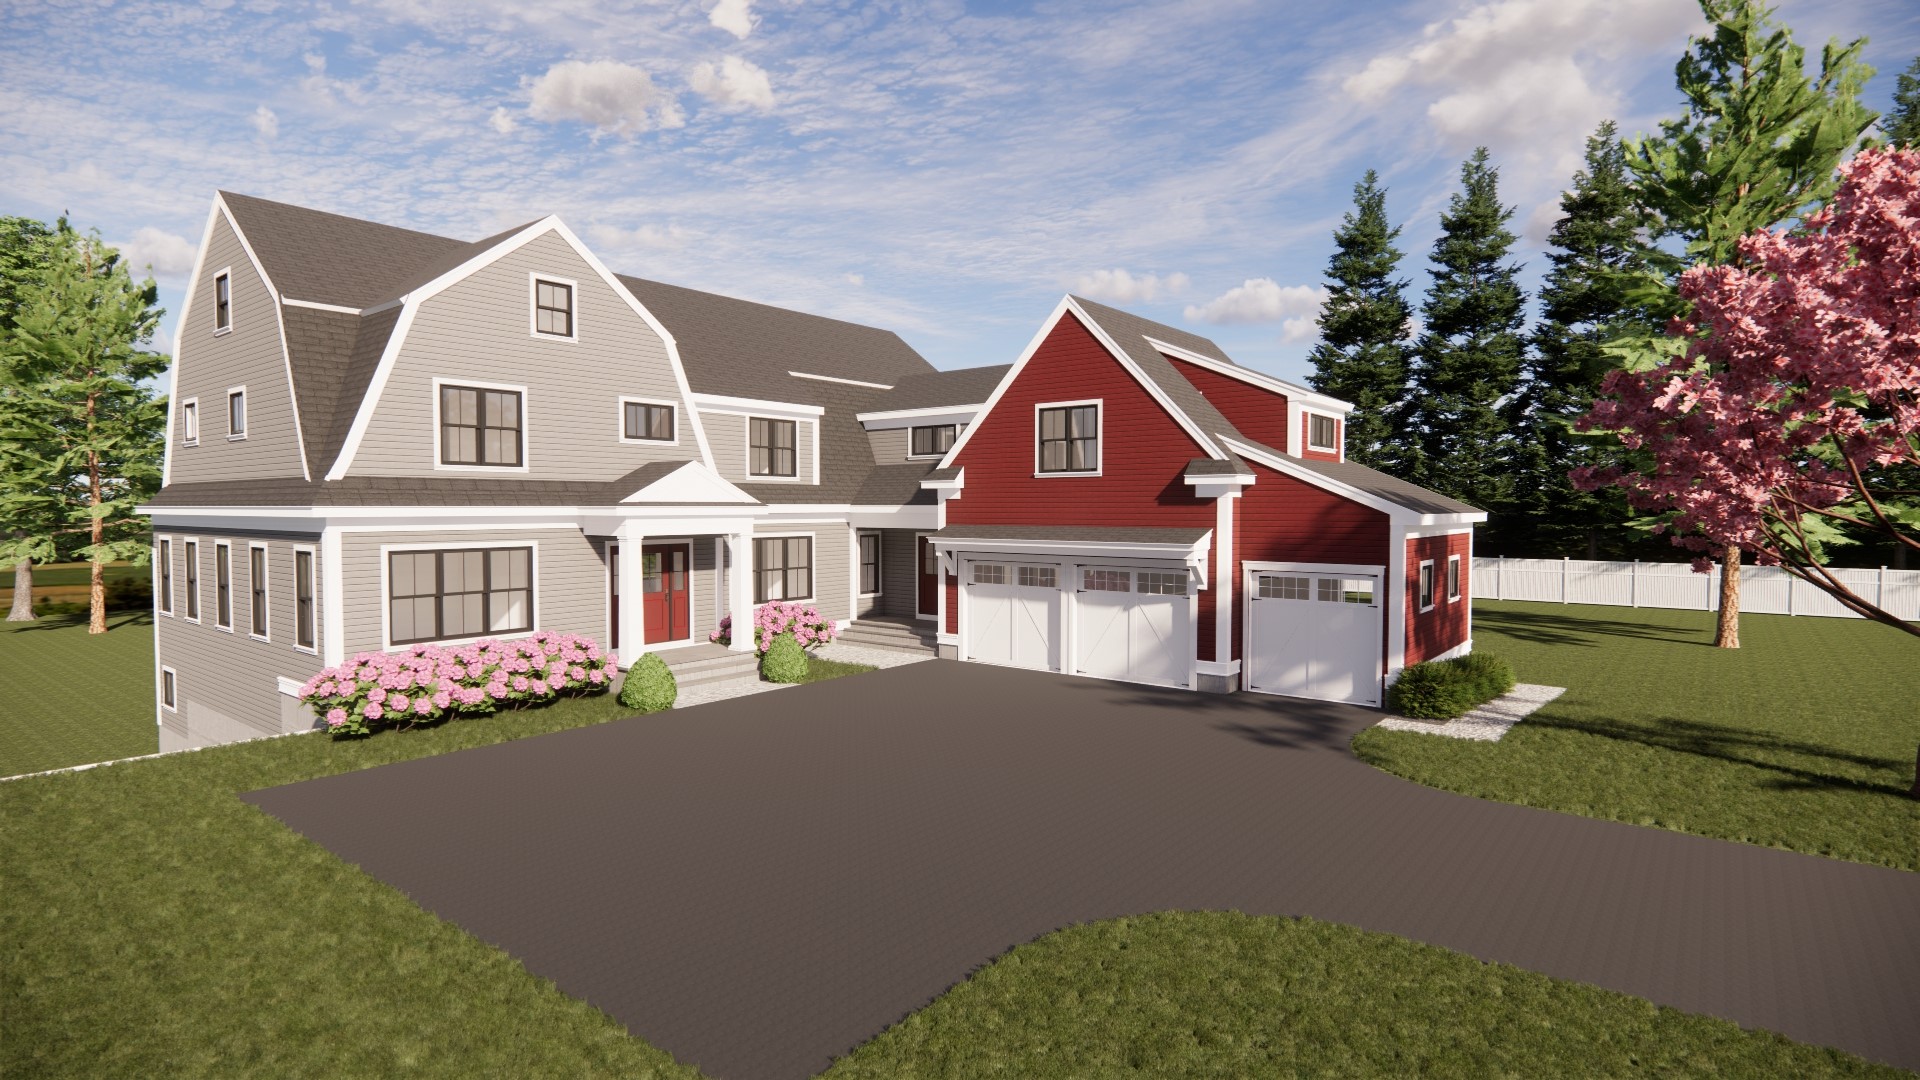 Shingle Style - New England Home Plans